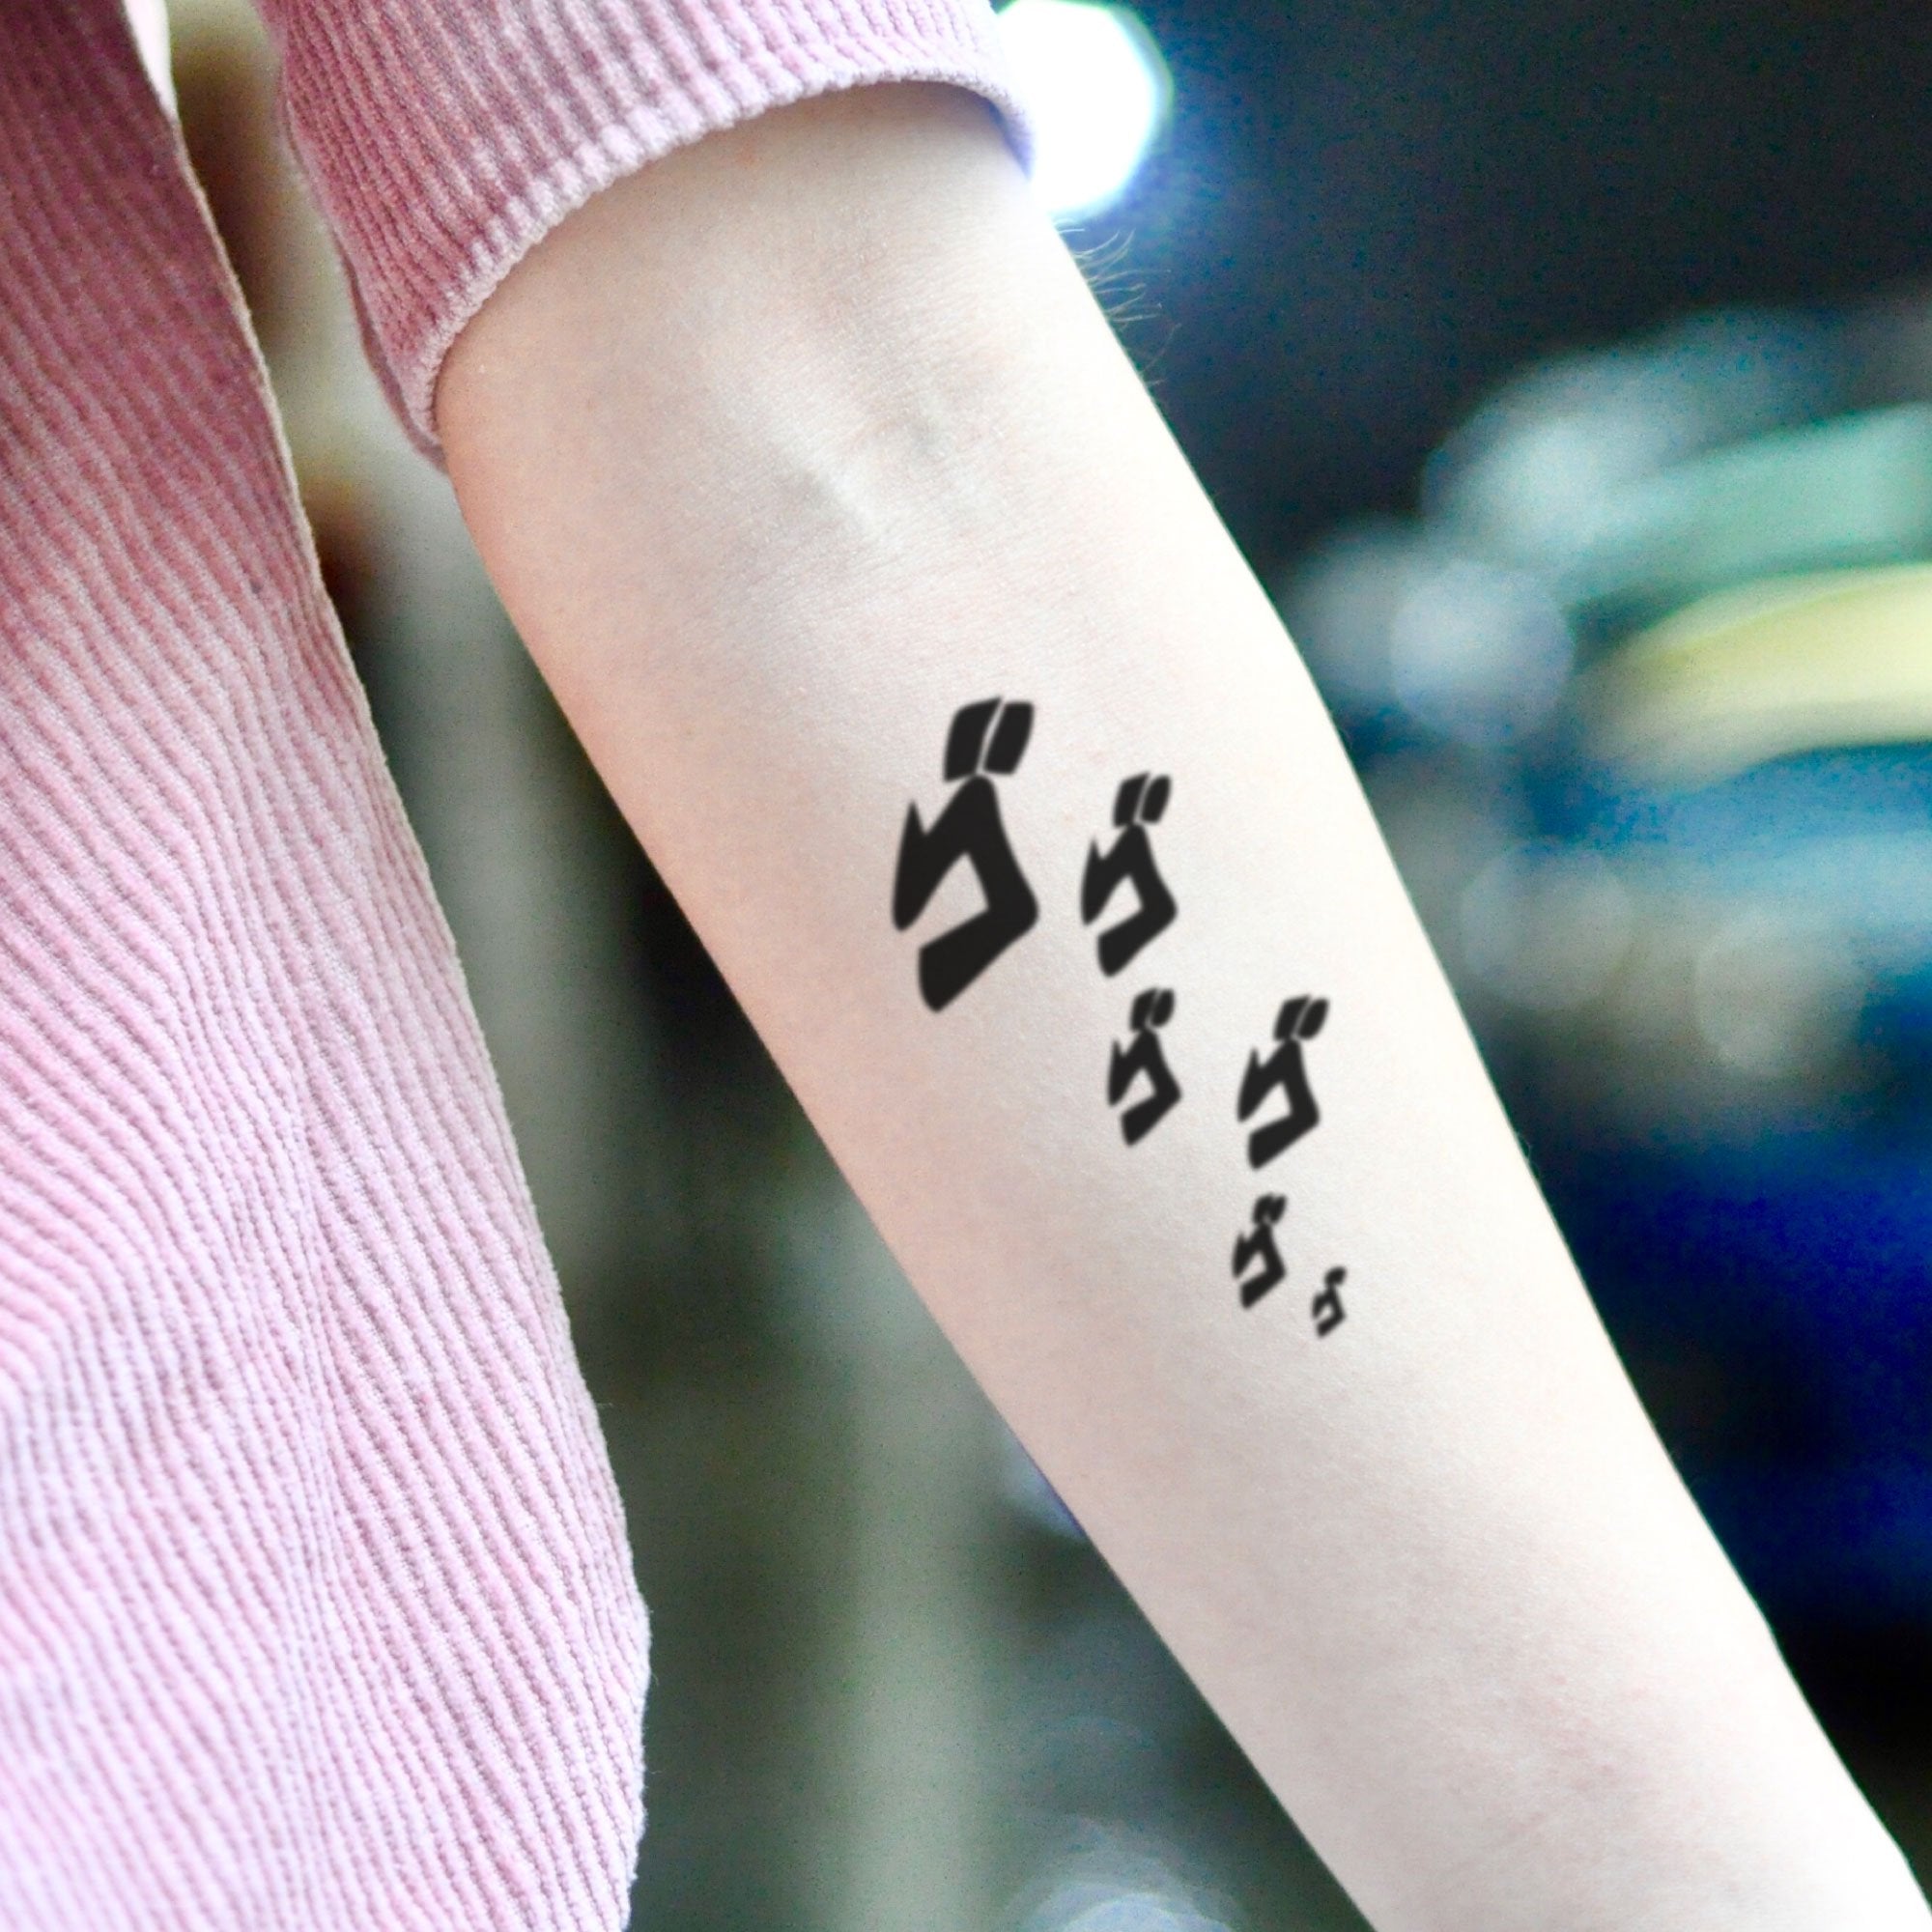 JJBA MENACING ゴゴゴ Jojo's Bizarre Adventure Temporary Tattoo Sticker -  OhMyTat